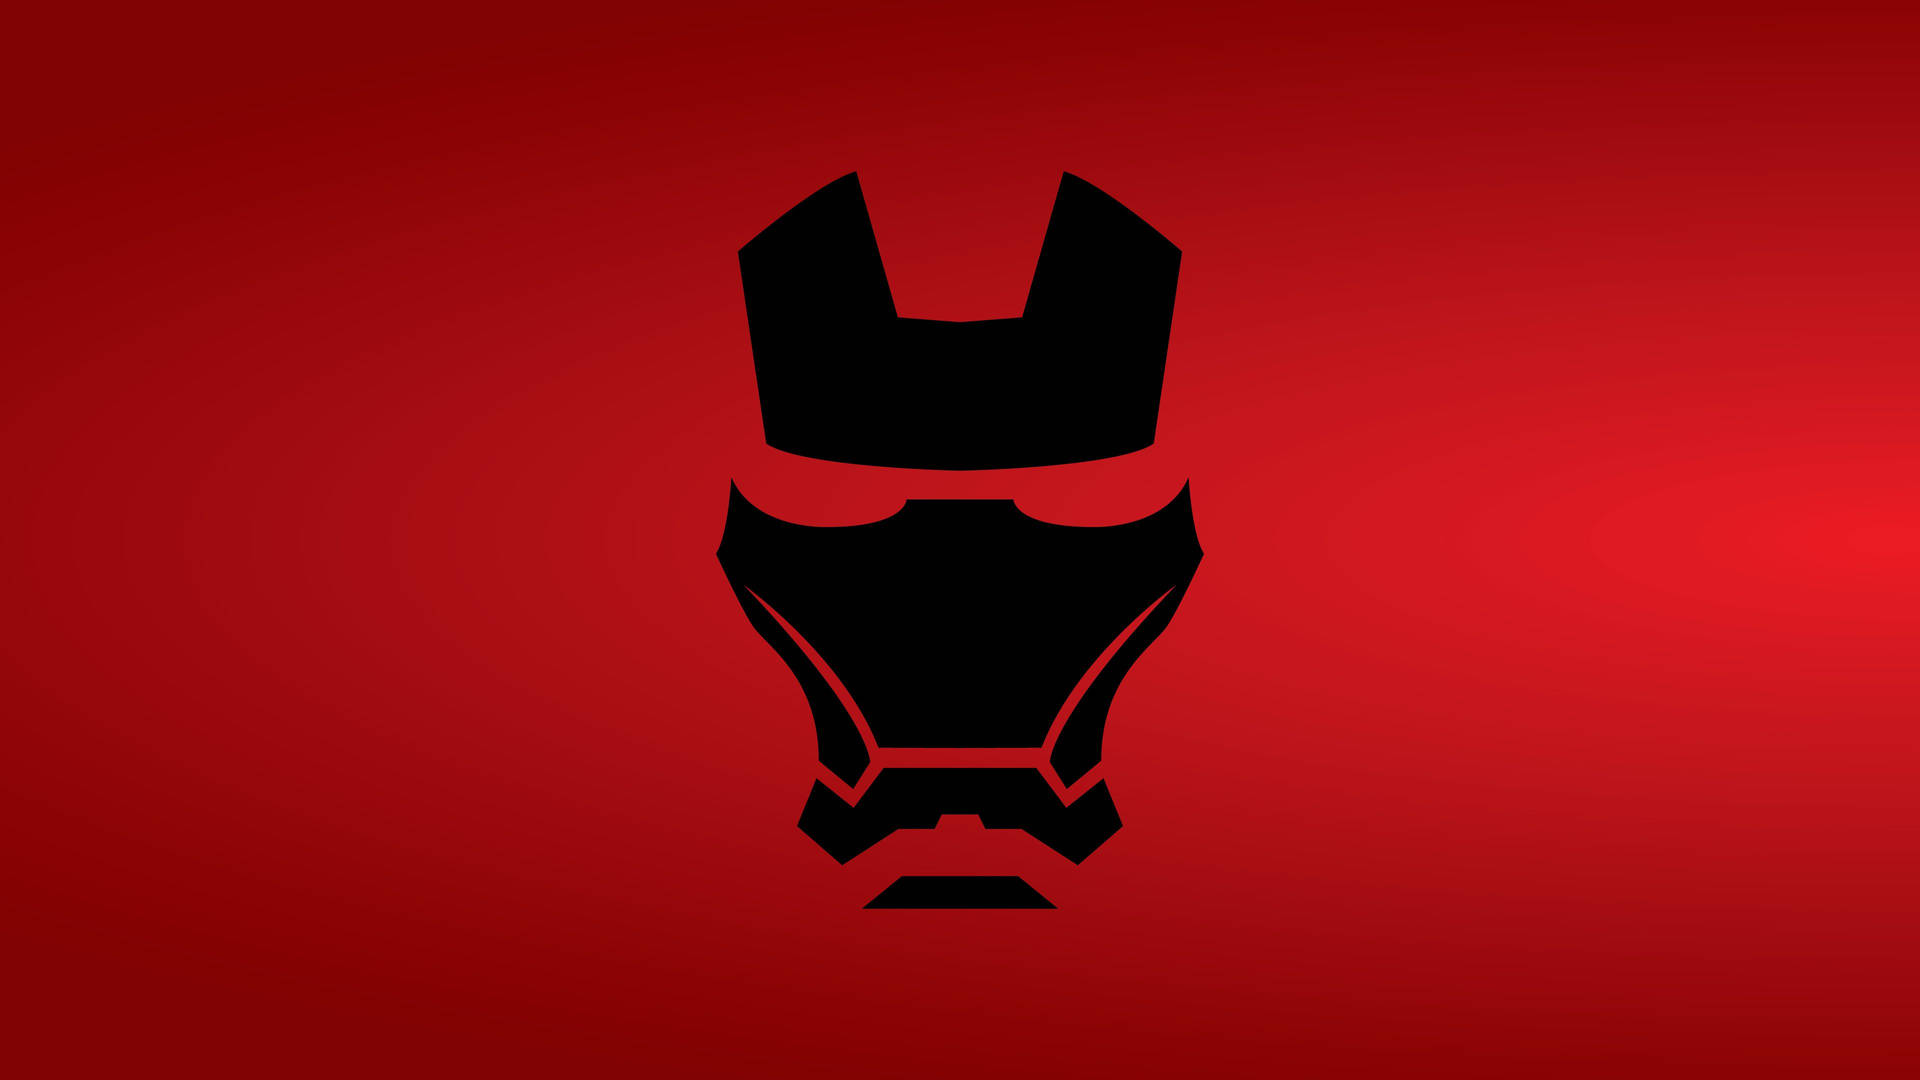 Abstract Iron Man Logo Background